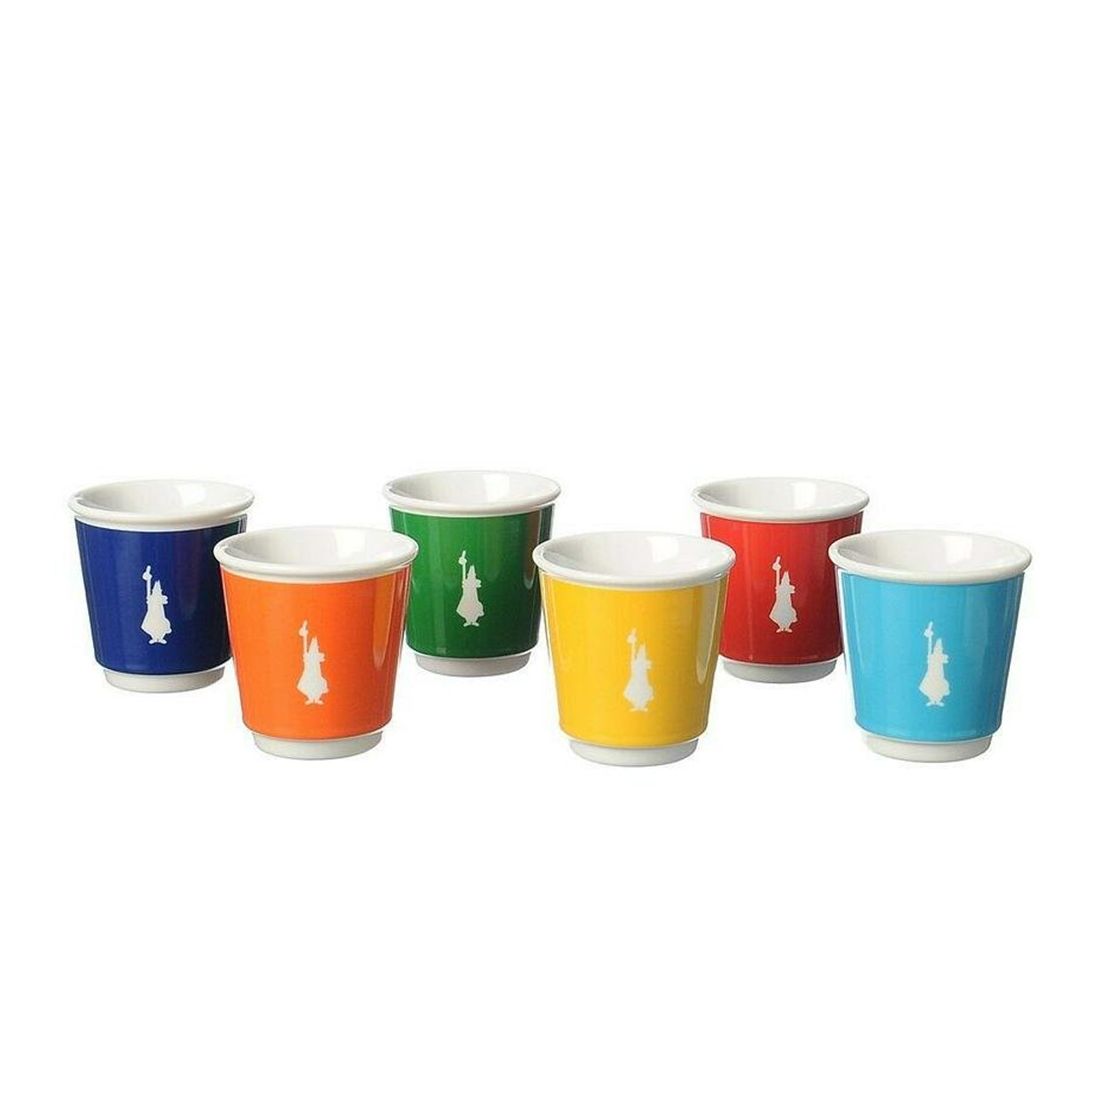 Bialetti Porcelain Espresso Cups (Set of 6)